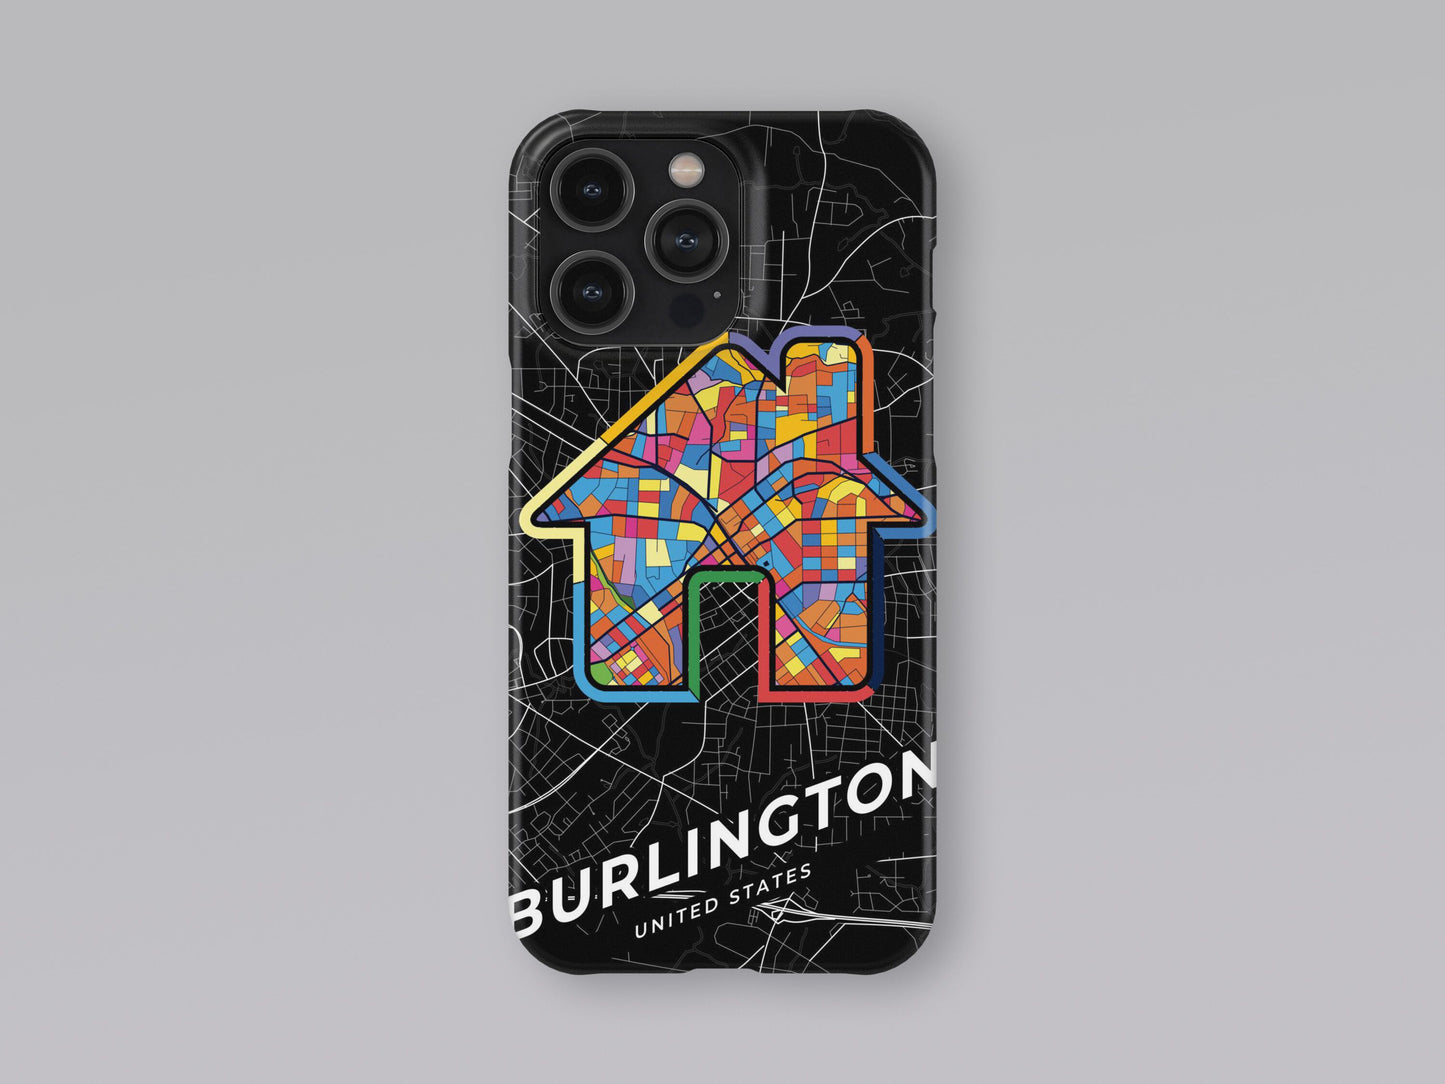 Burlington North Carolina slim phone case with colorful icon. Birthday, wedding or housewarming gift. Couple match cases. 3